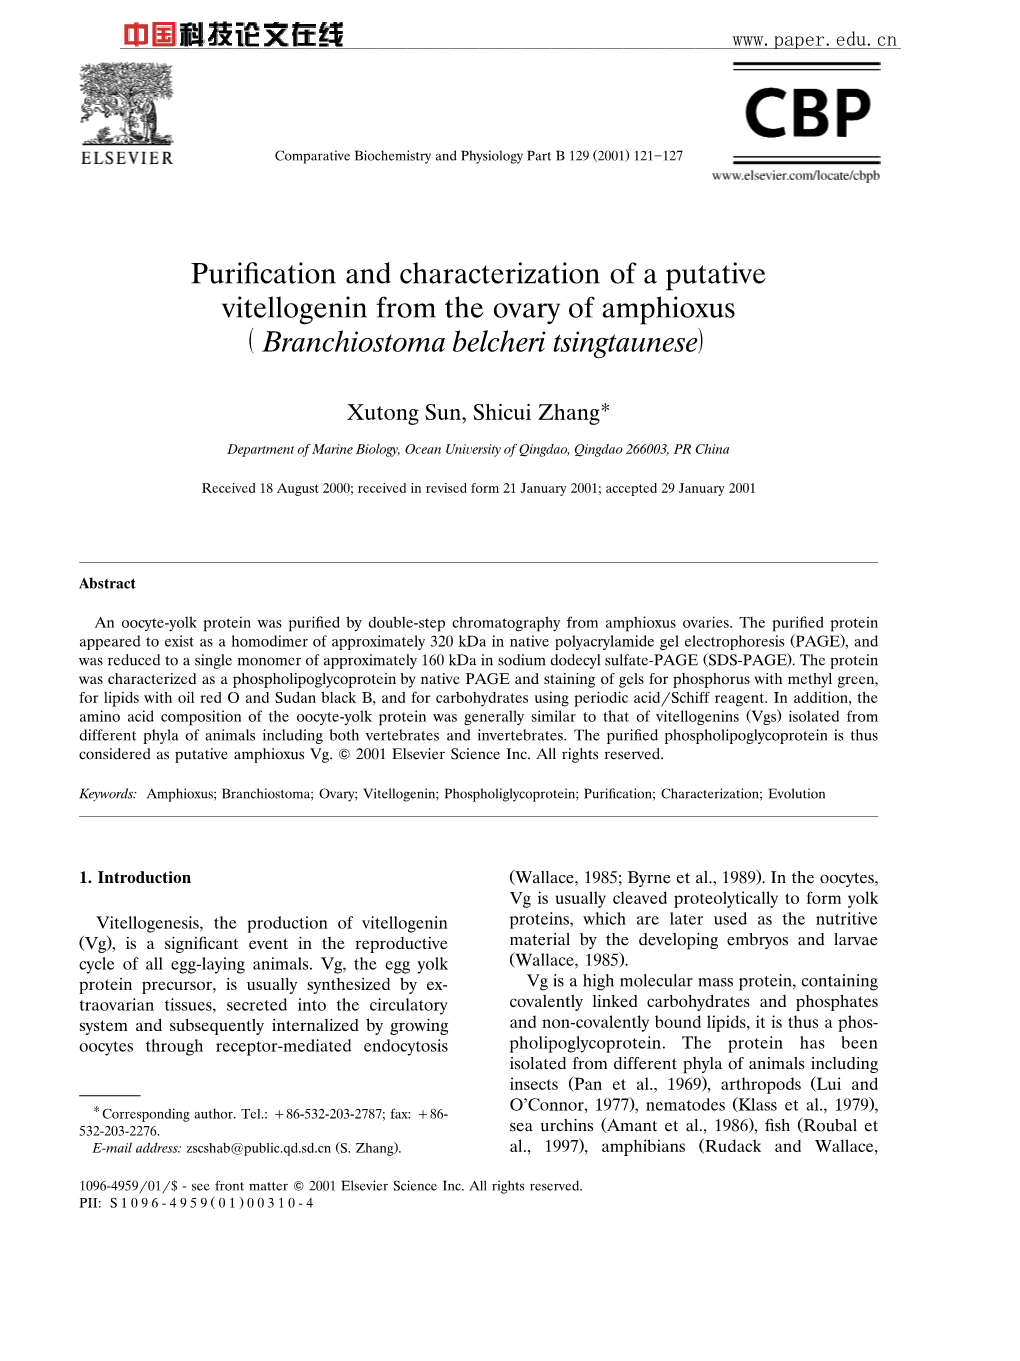 Purification and Characterization of a Putative Vitellogenin from the Ovary